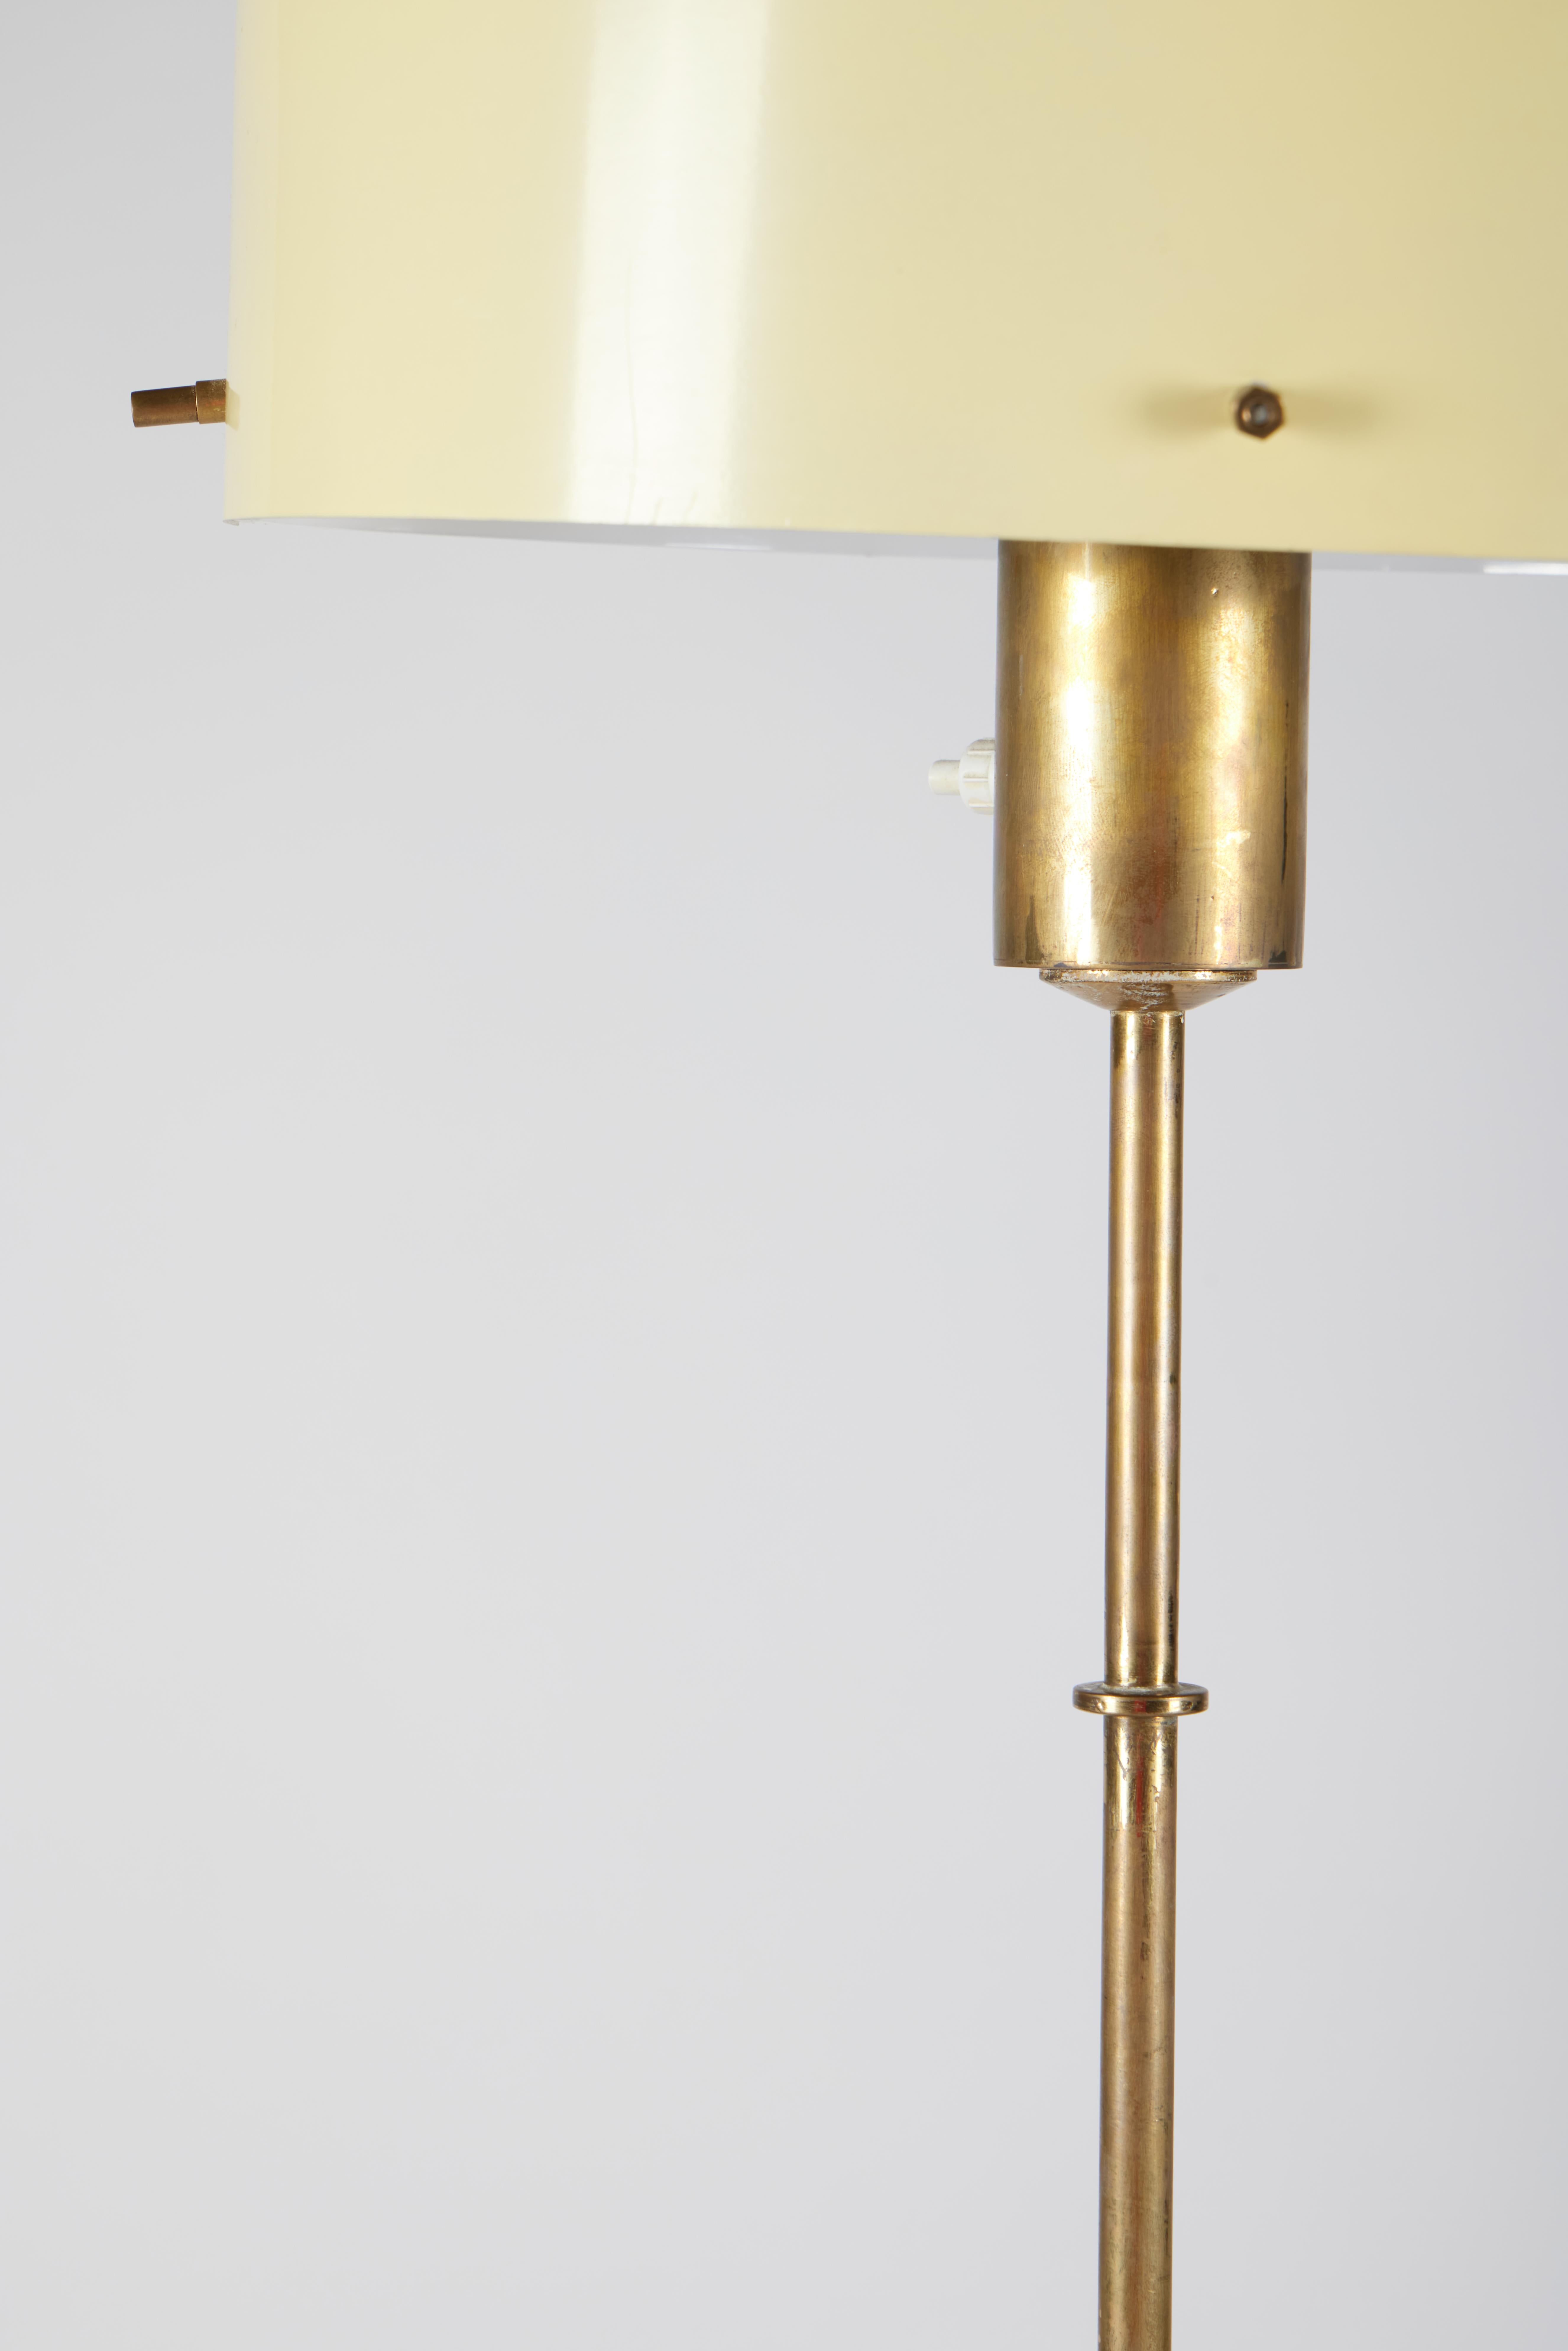 Italian Mid-Century, Modern Floor Lamp with Adjustable Height by Stilnovo, 1950s For Sale 3